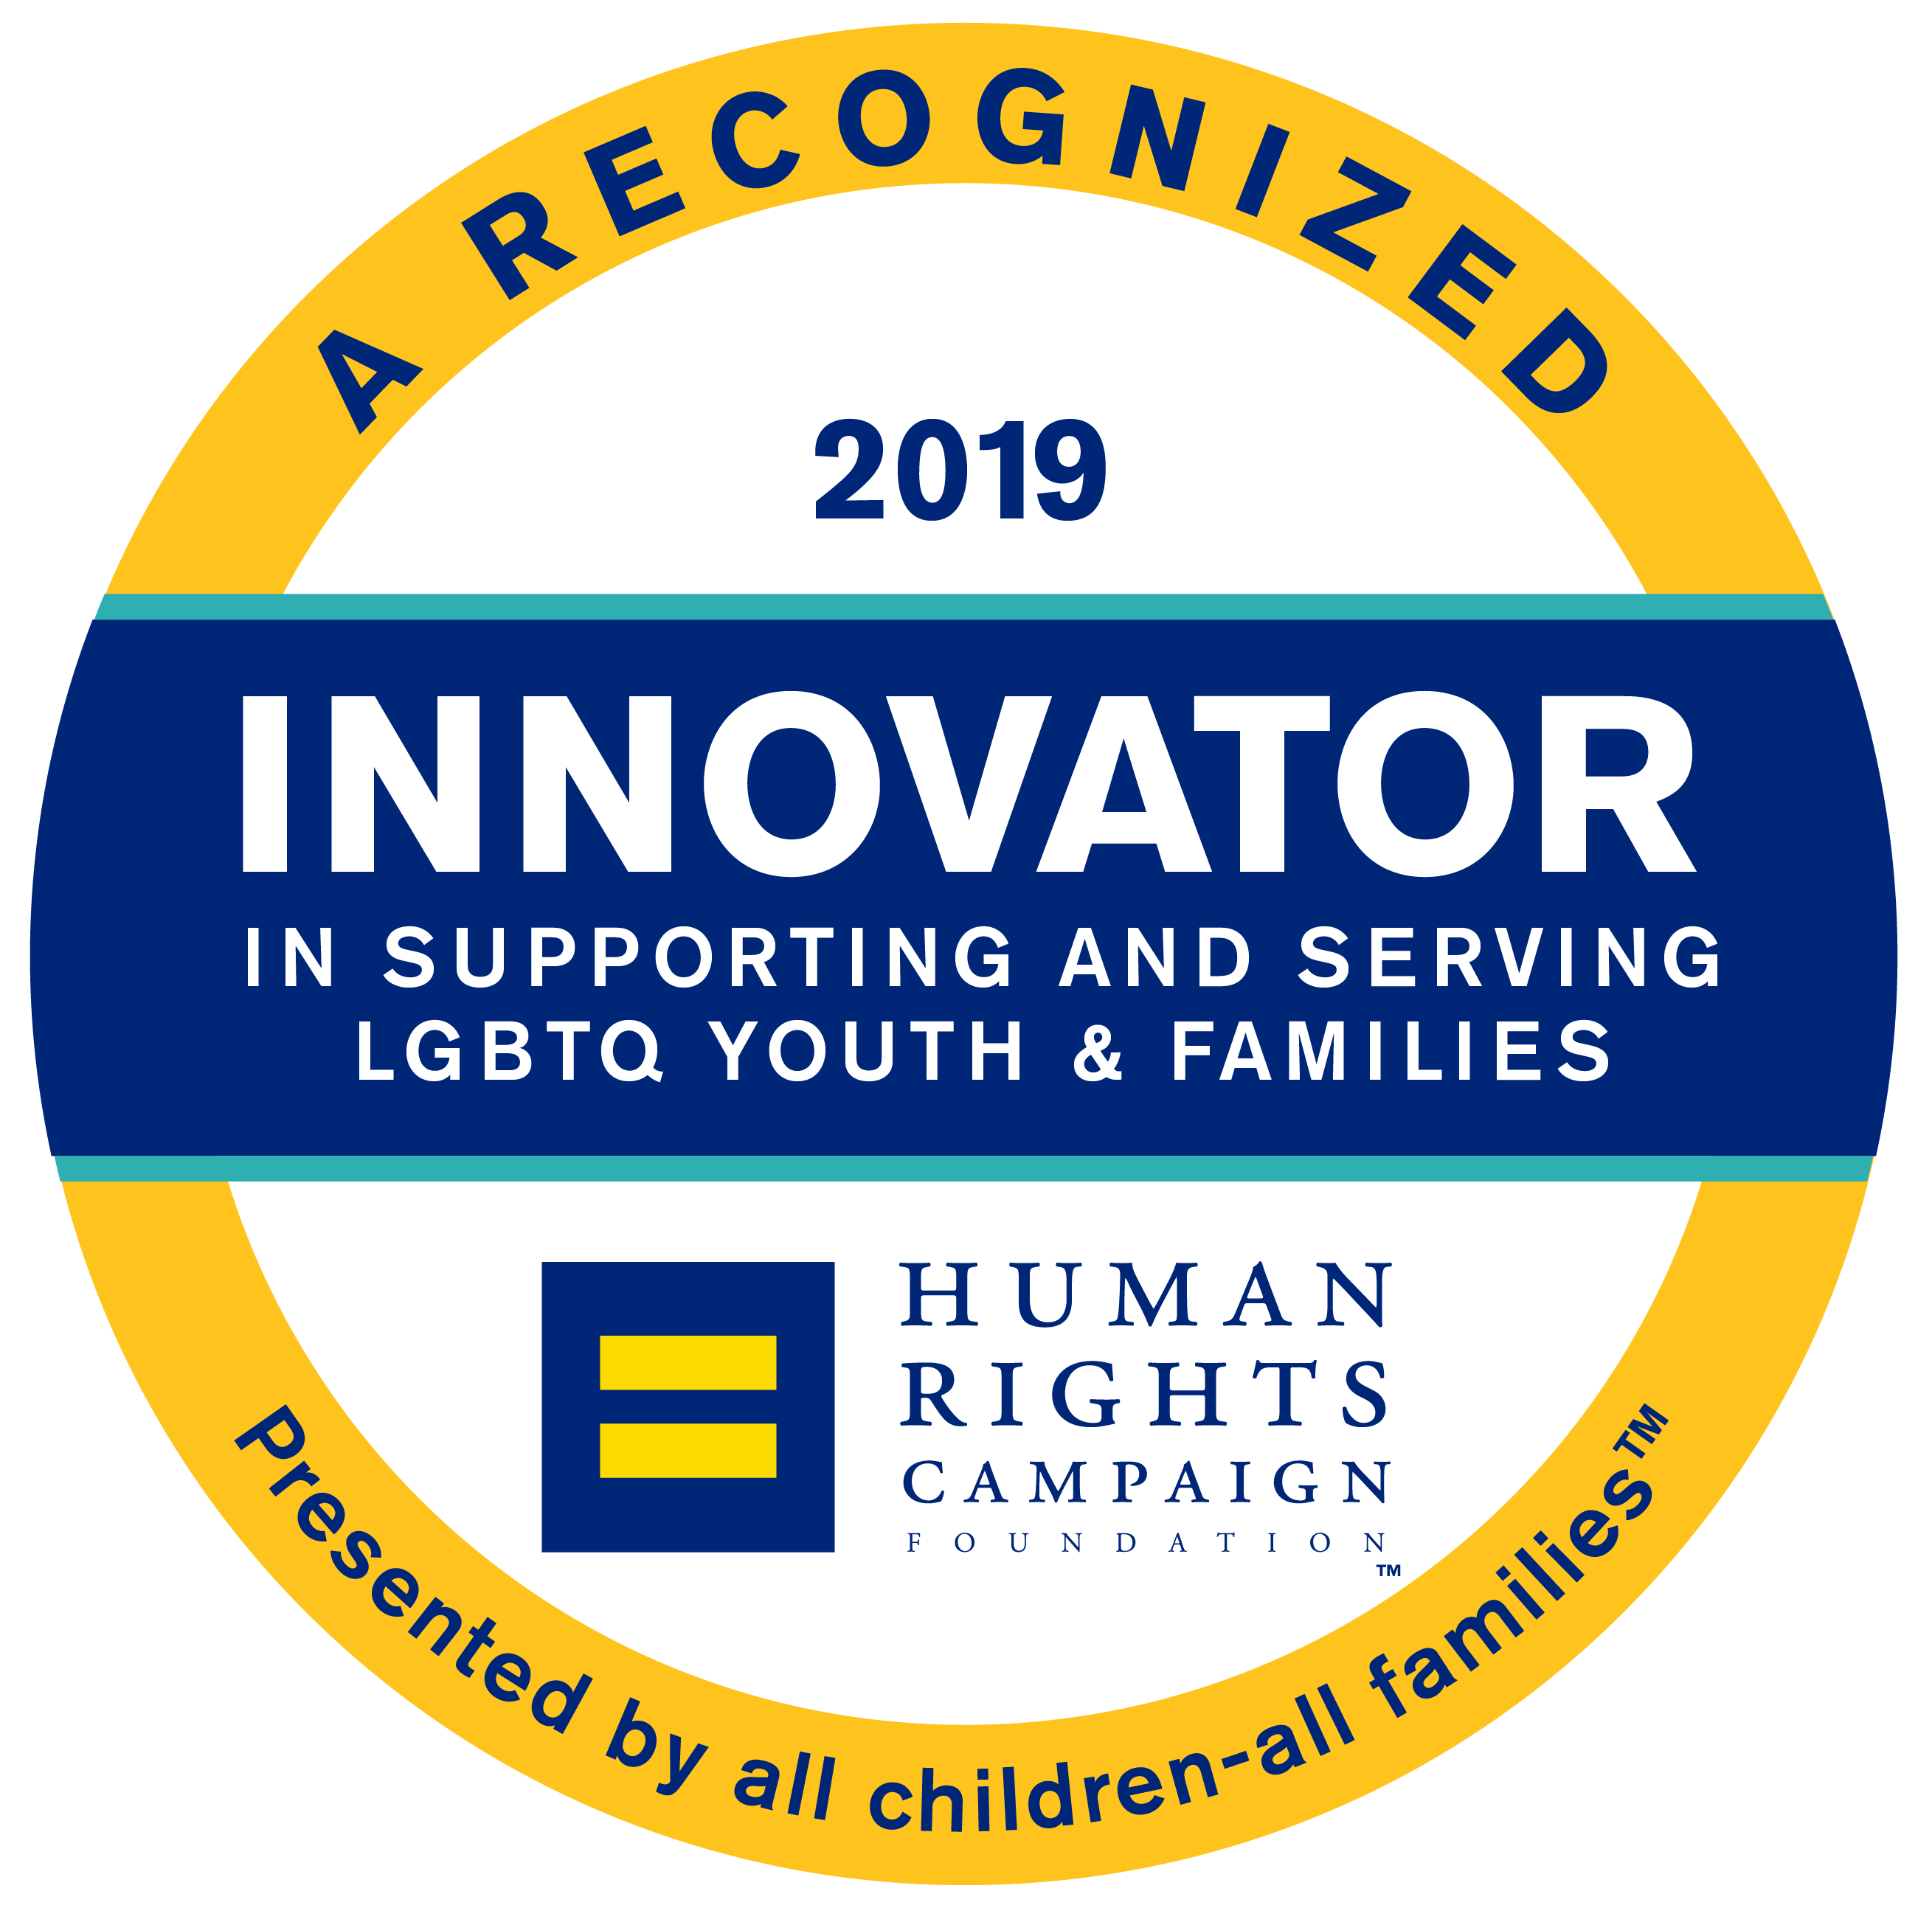 Human Rights Campaign recognition emblem